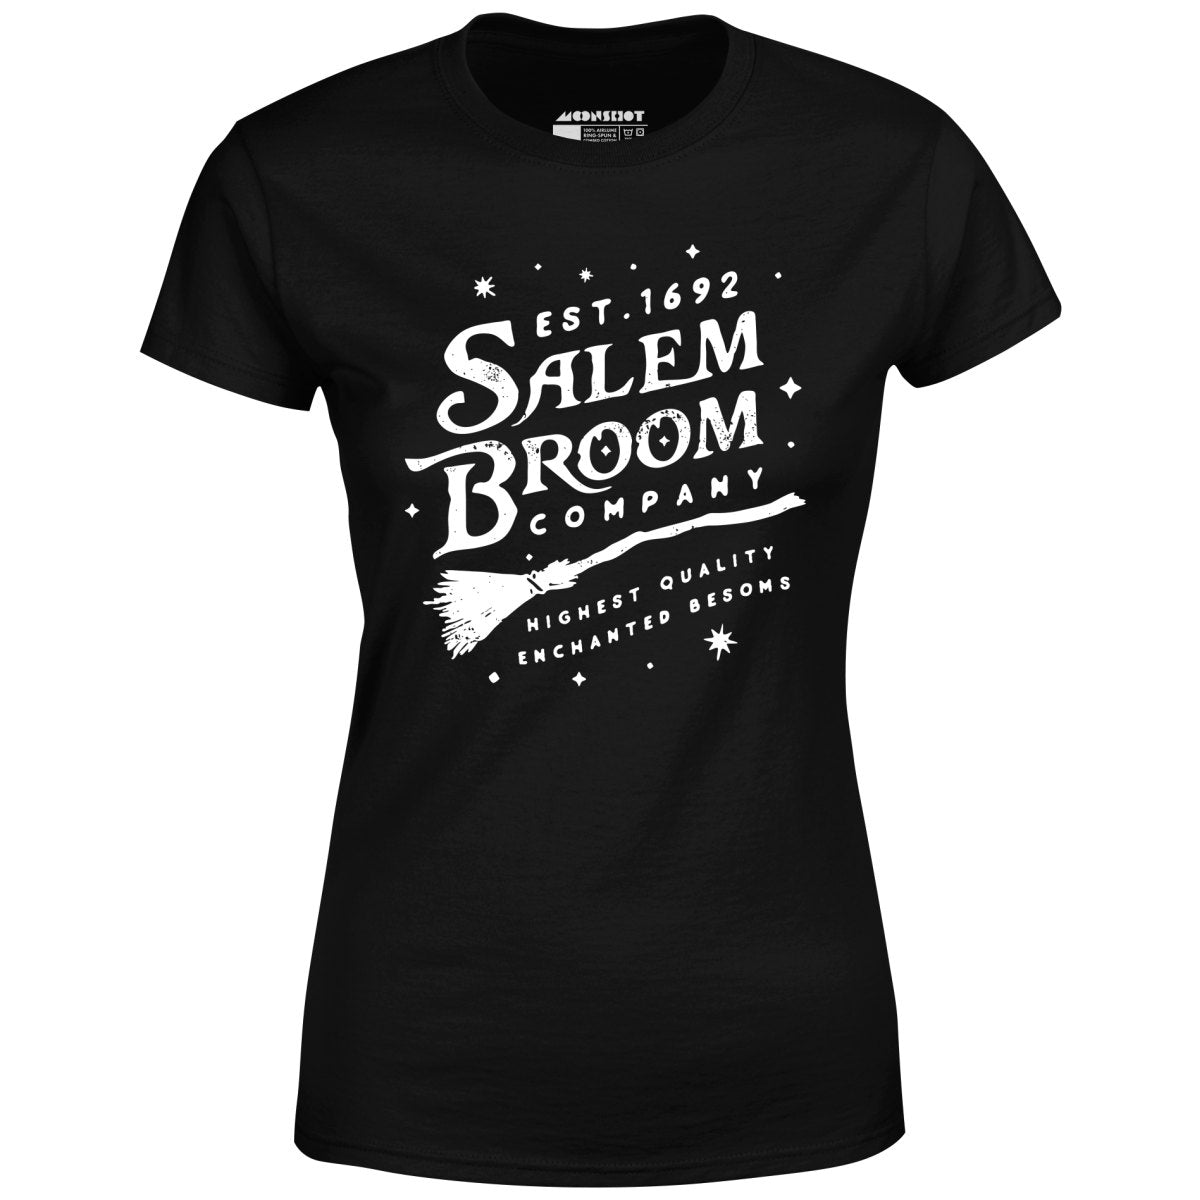 Salem Broom Company - Women's T-Shirt